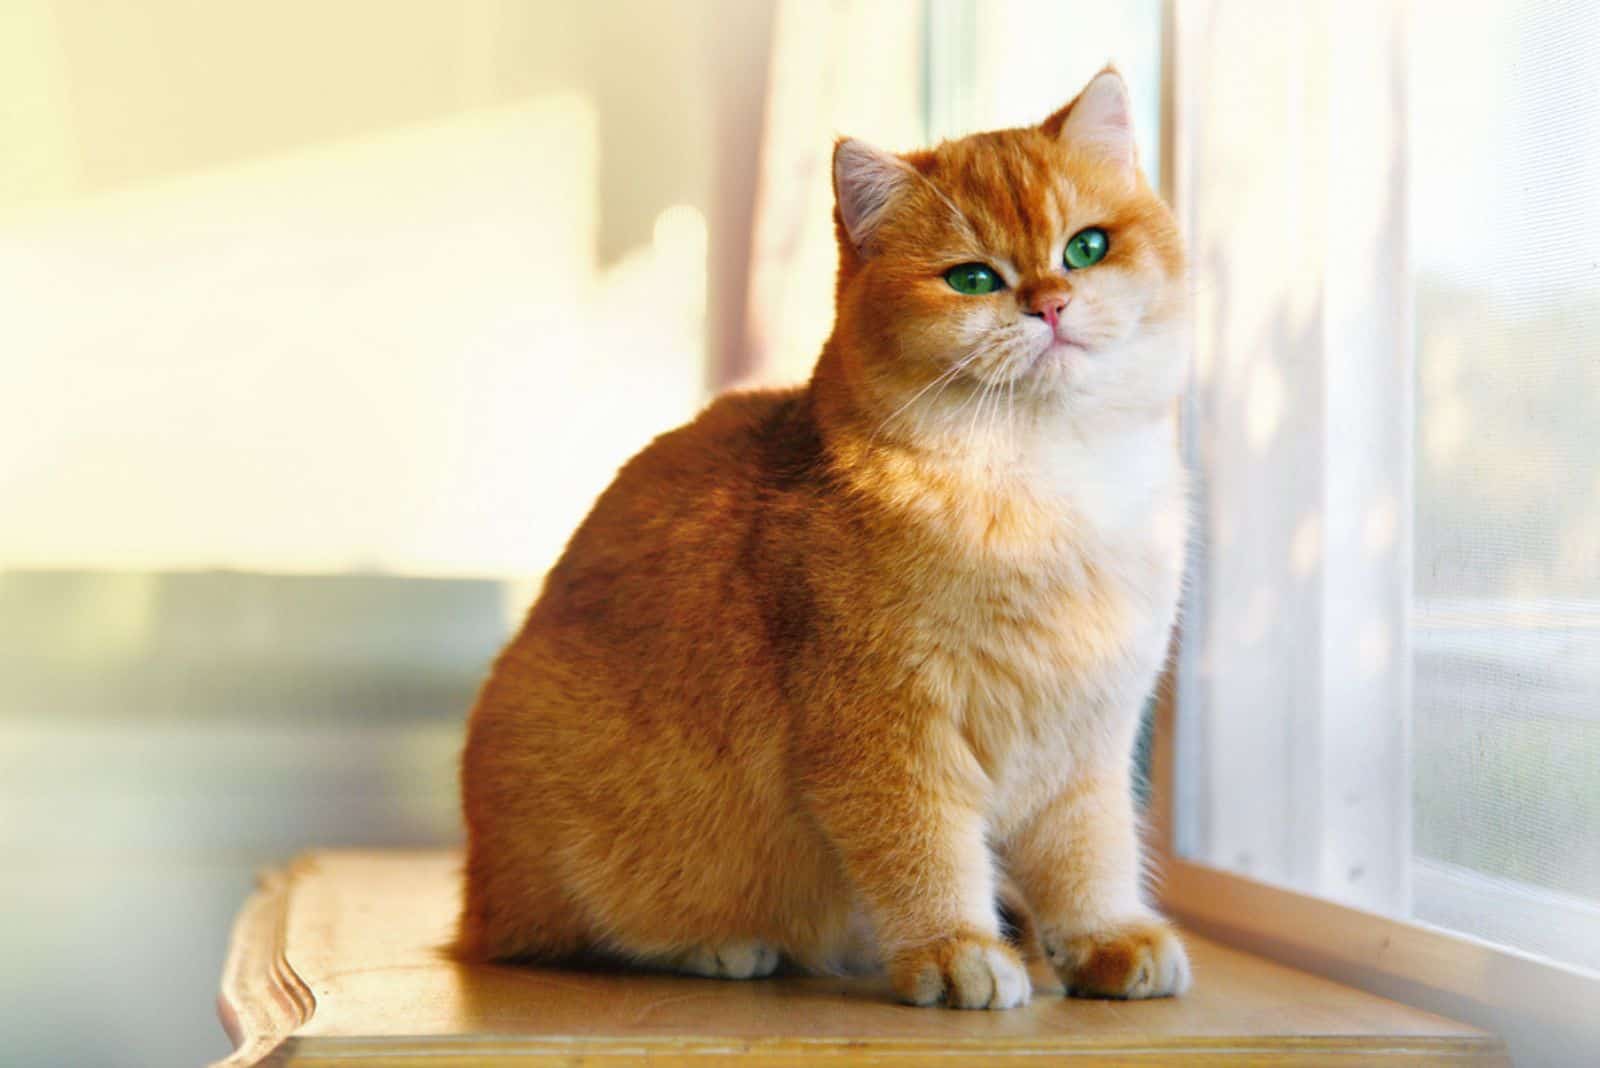 ginger cat garfield sitting on window shell